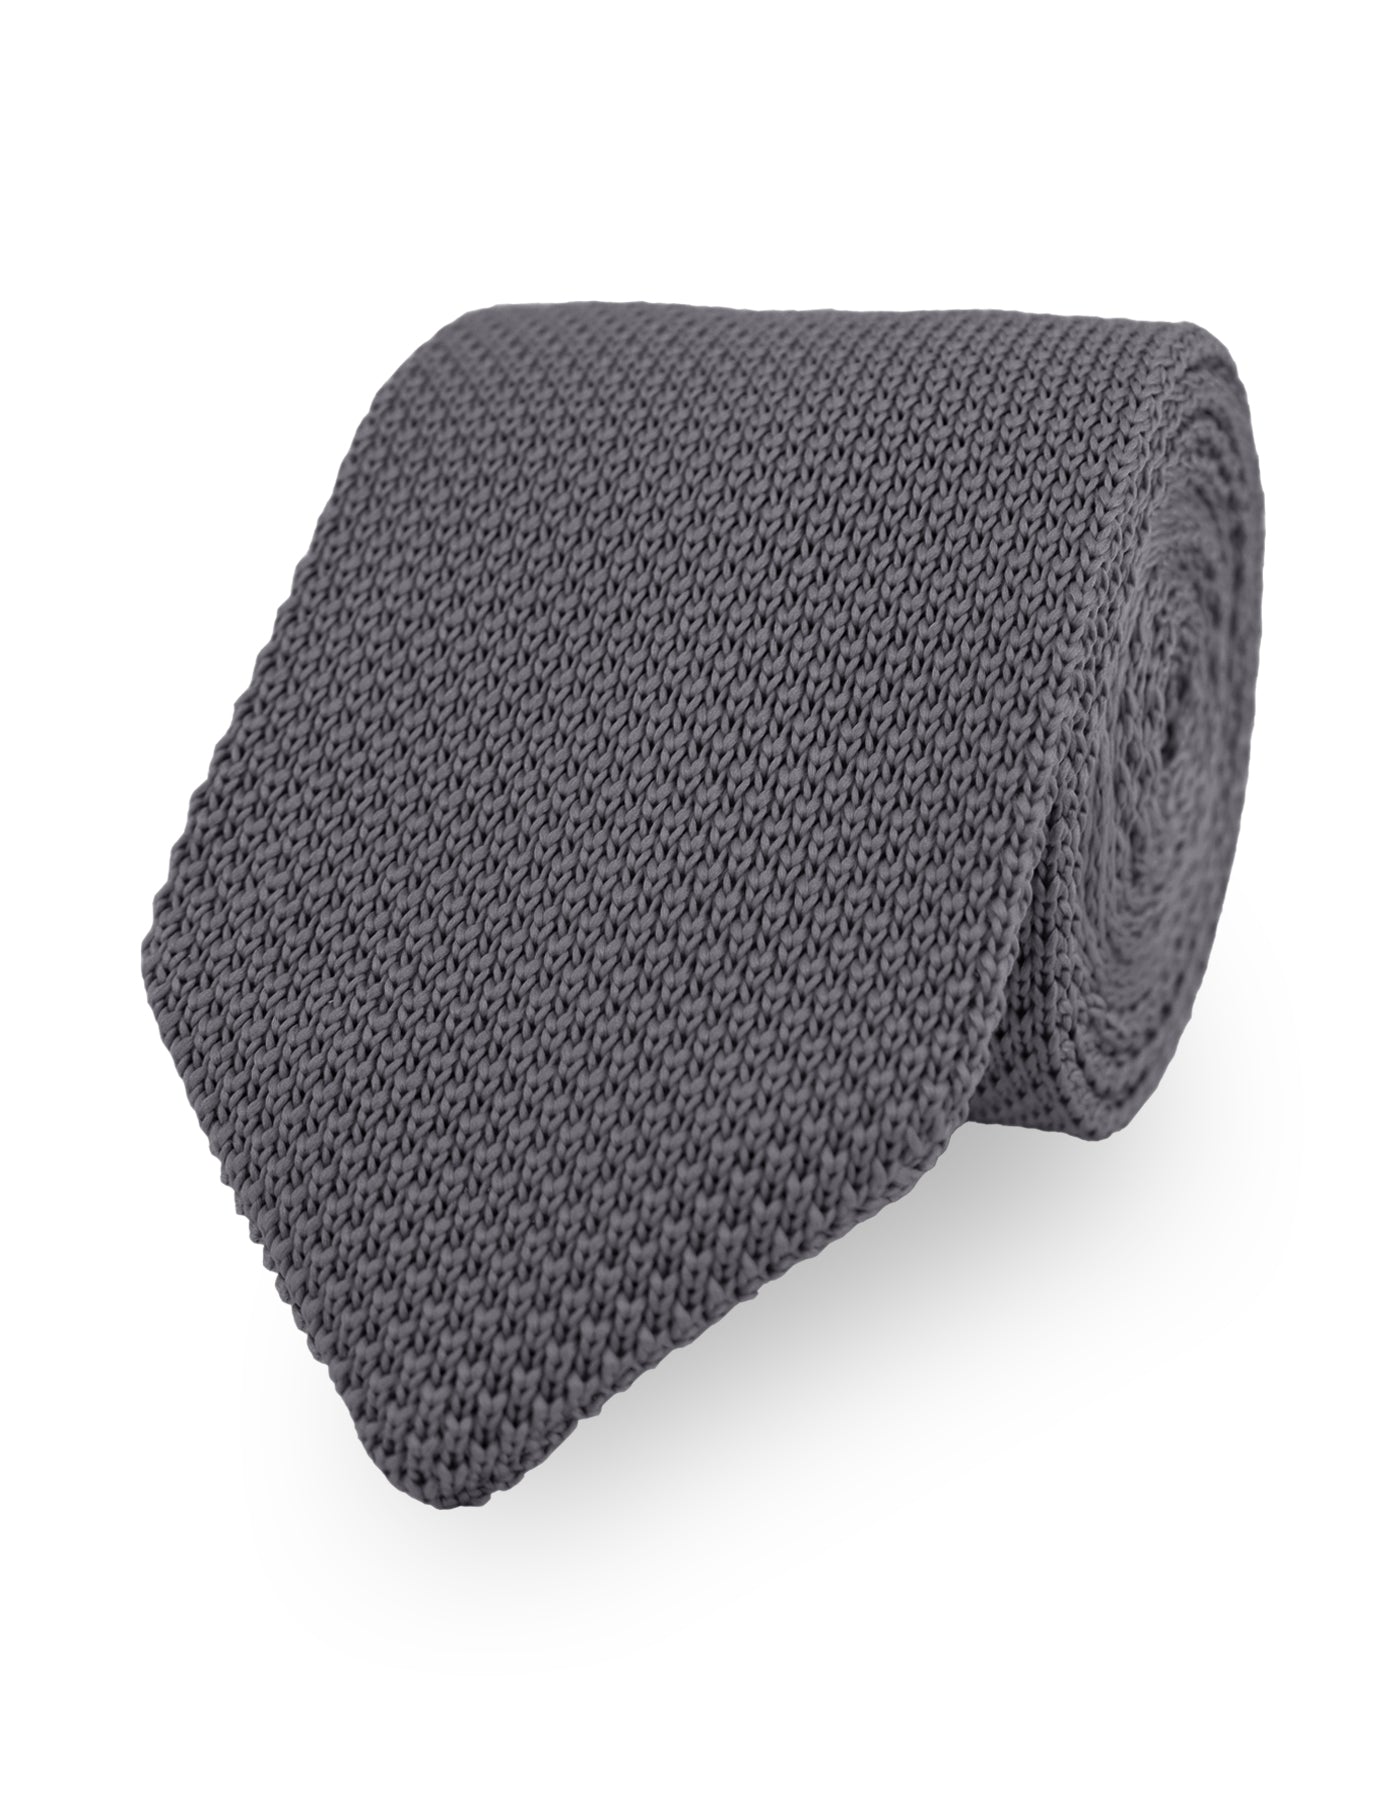 100% Polyester Diamond End Knitted Tie - Dark Grey